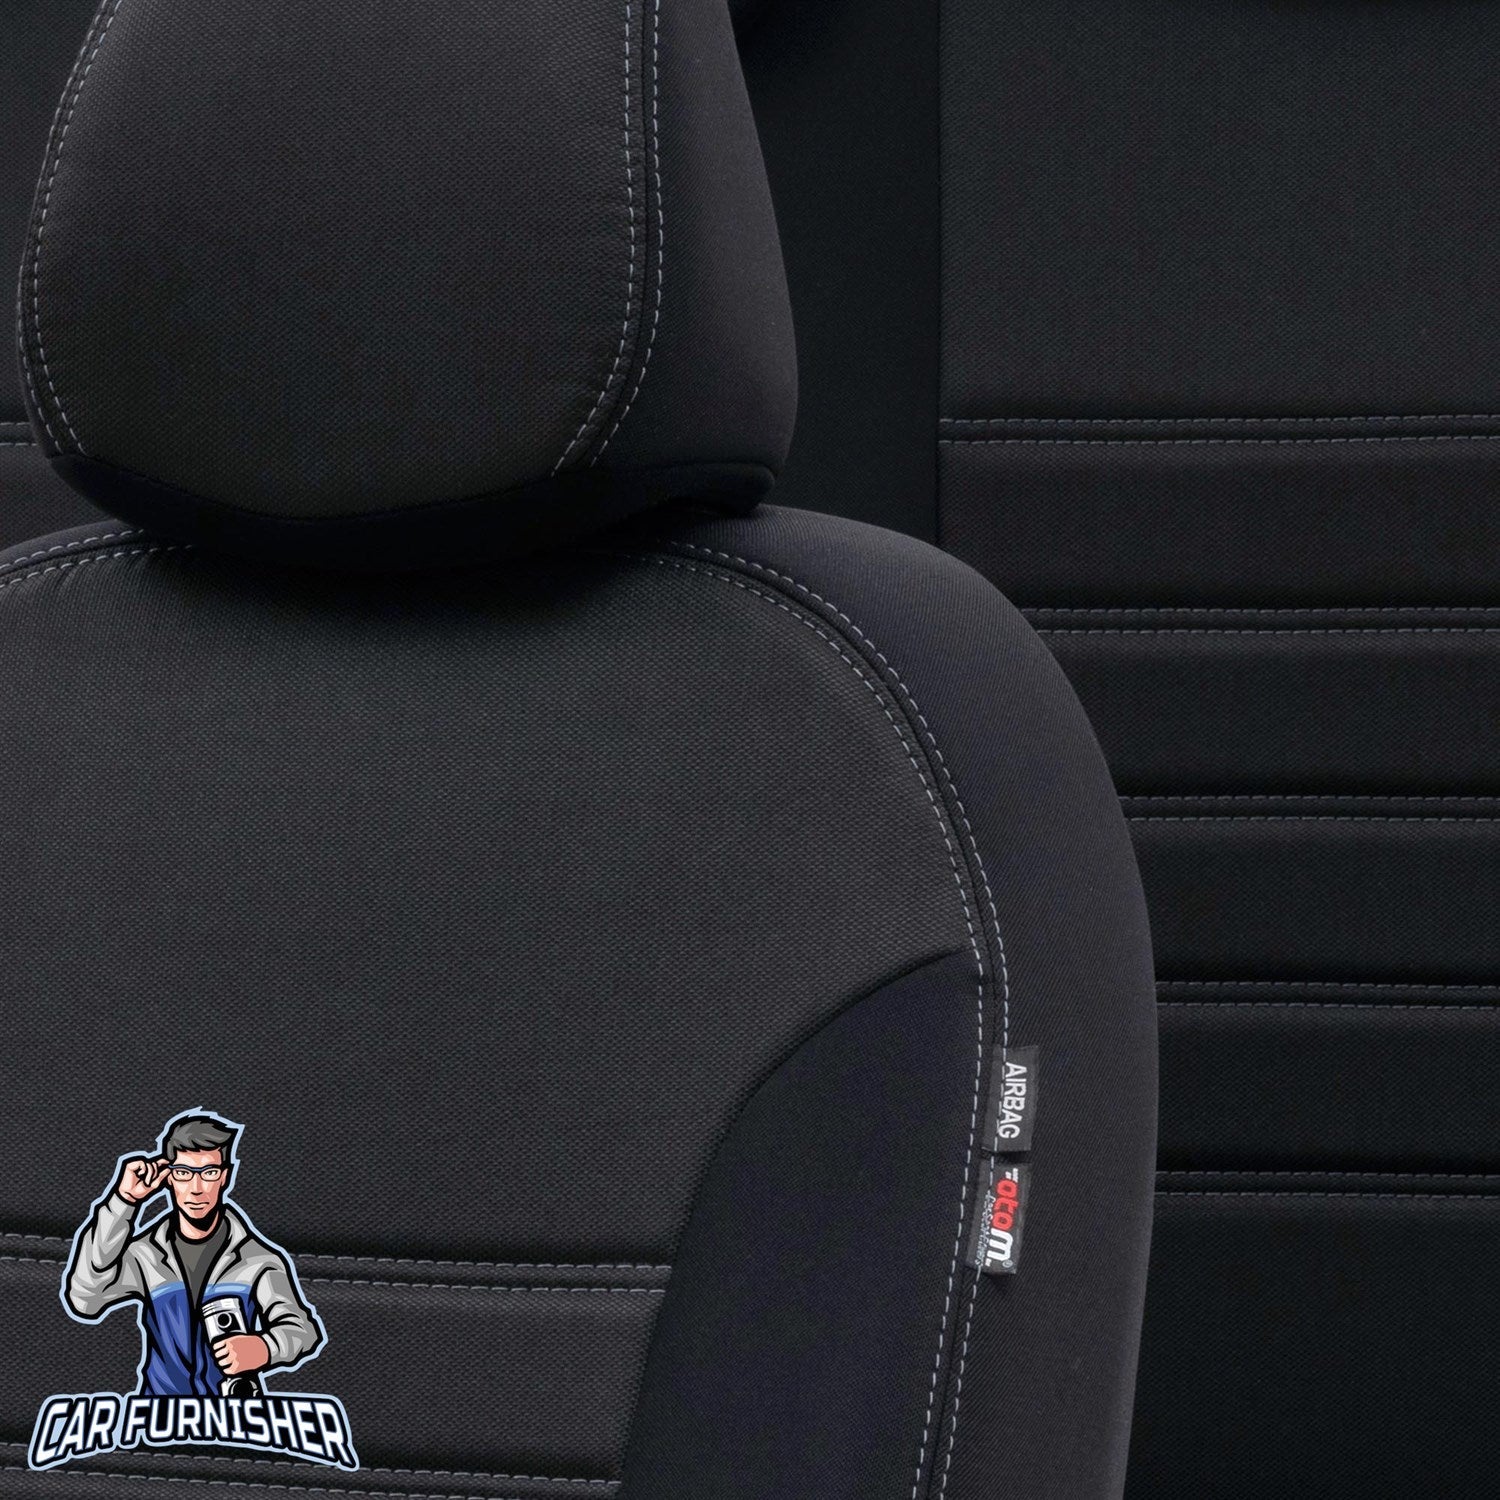 Nissan Navara Seat Covers Original Jacquard Design Black Jacquard Fabric